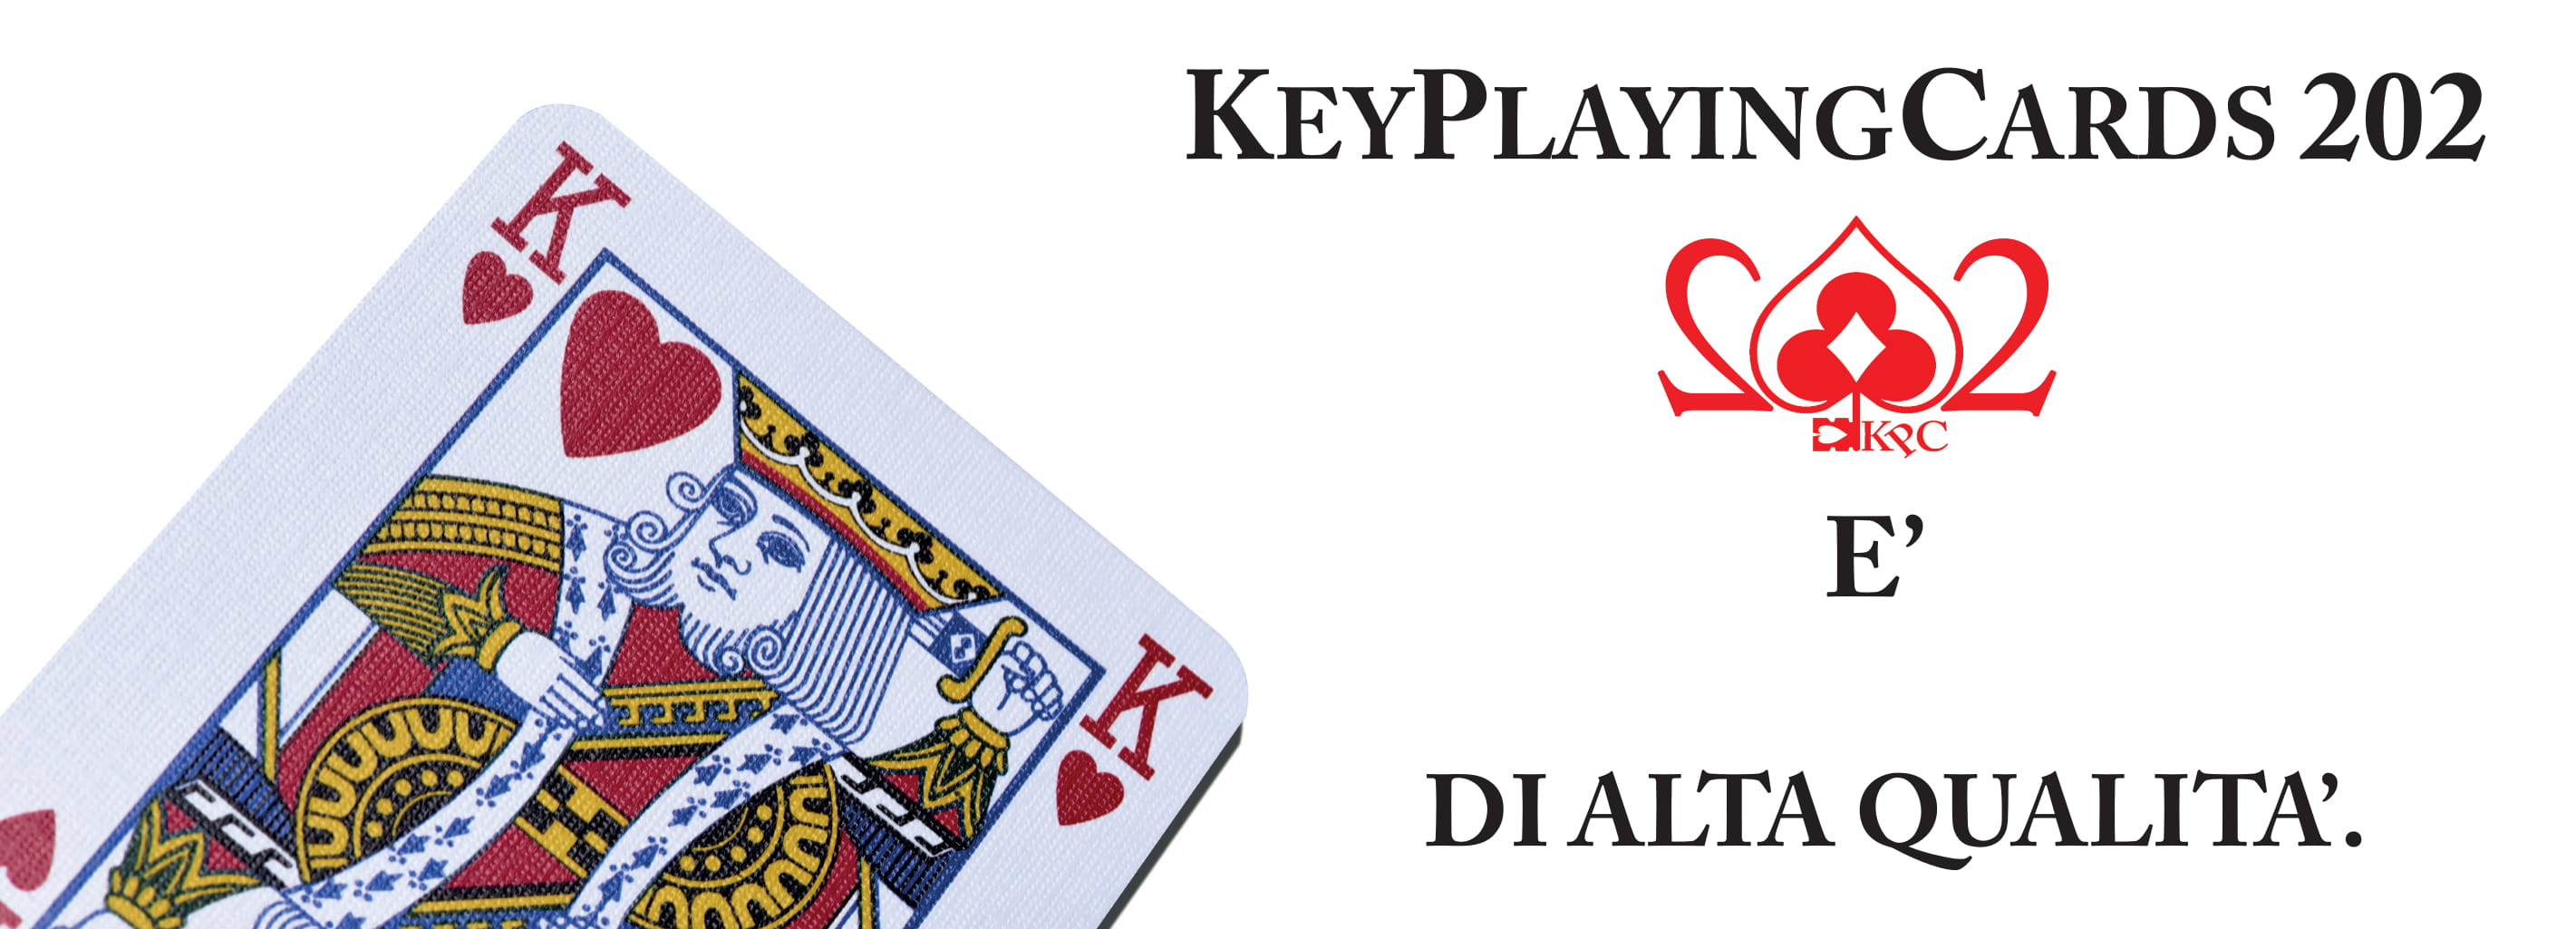 Keyplayingcards 202 - 3